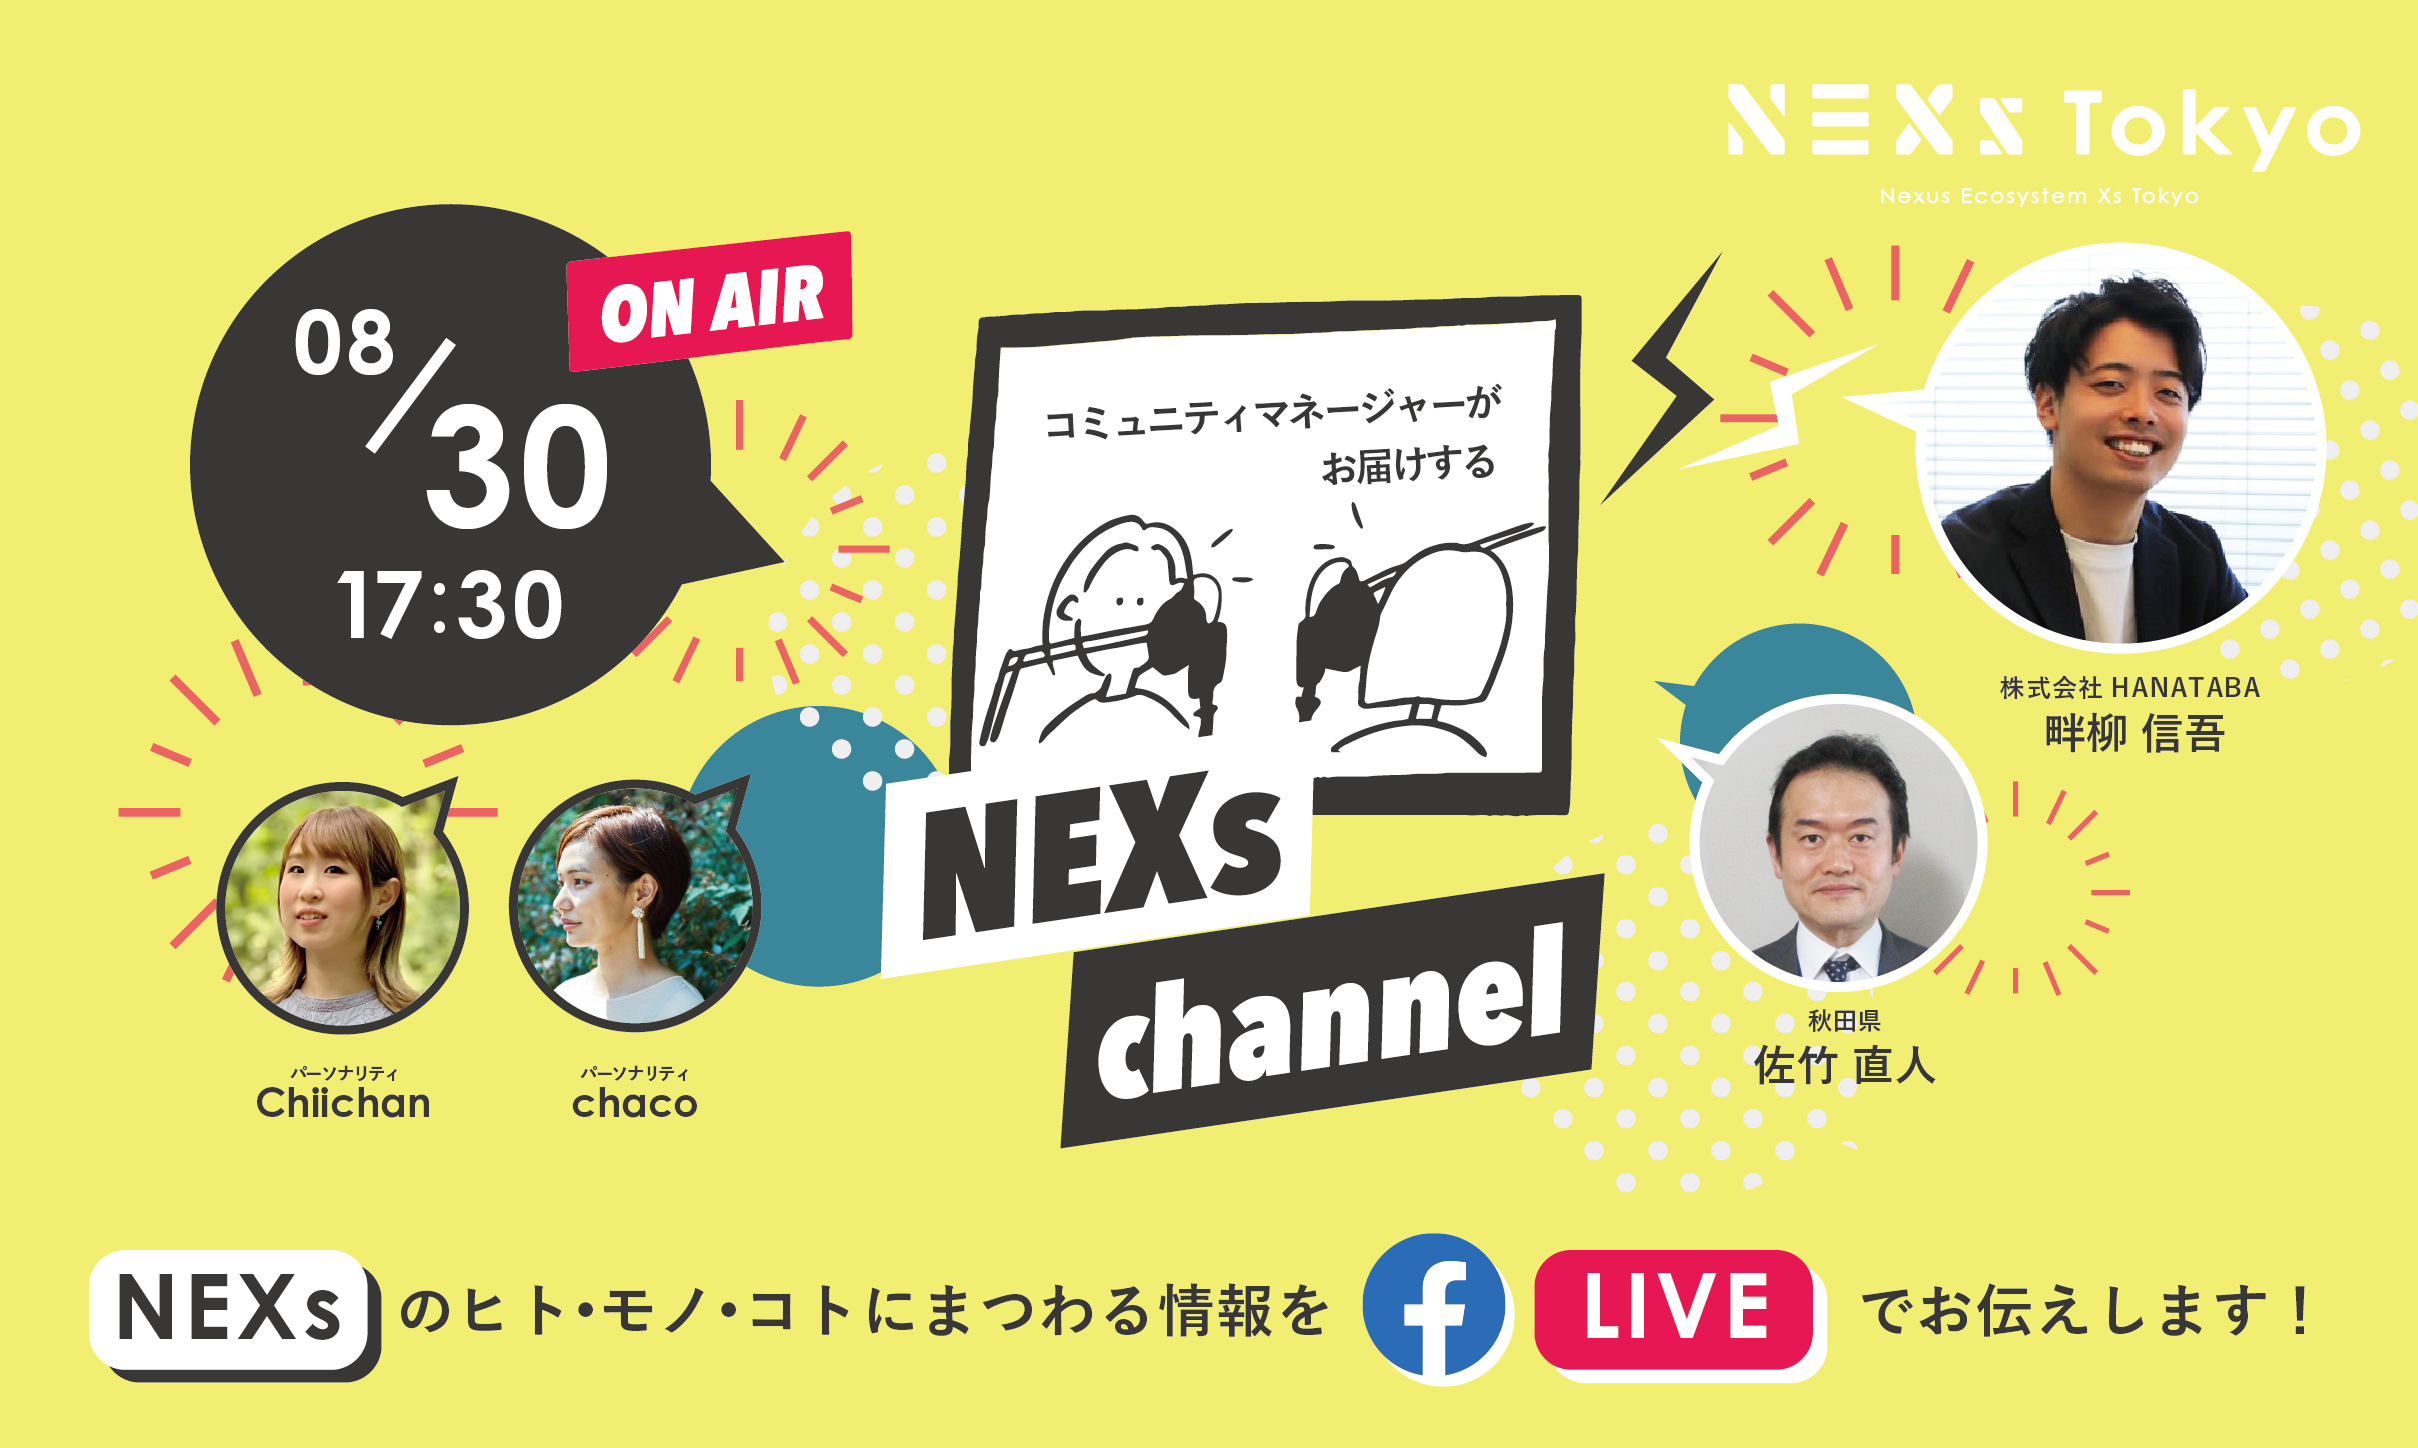 NEXs channel #31 -NEXs Tokyoのヒト・モノ・コトを特設ラジオブースから生放送でお届け！-